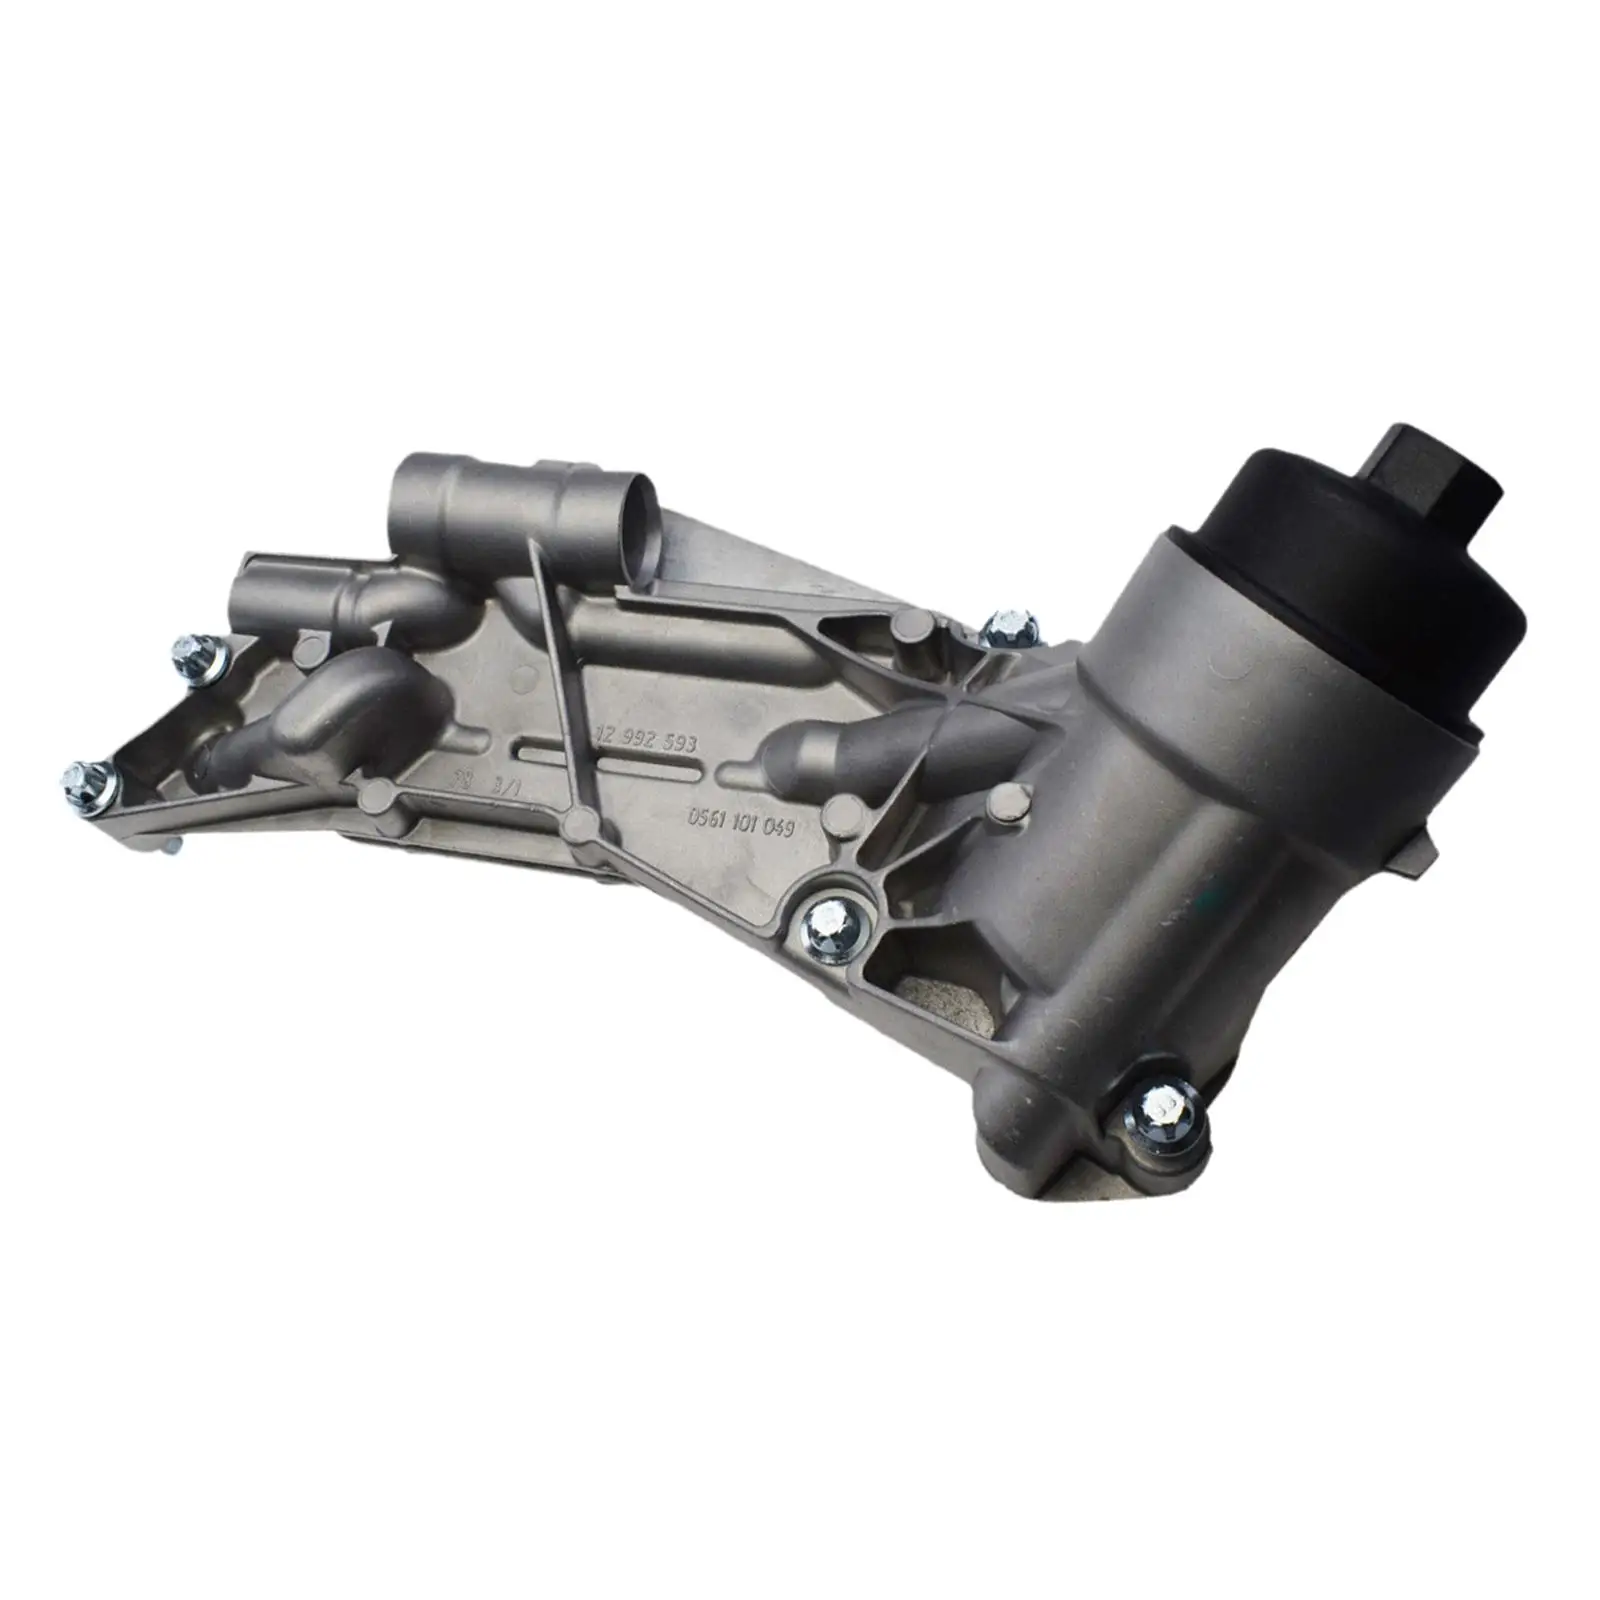 Oil Cooler Aluminium 93186324 for Chevrolet Cruze Vehicle Spare Parts